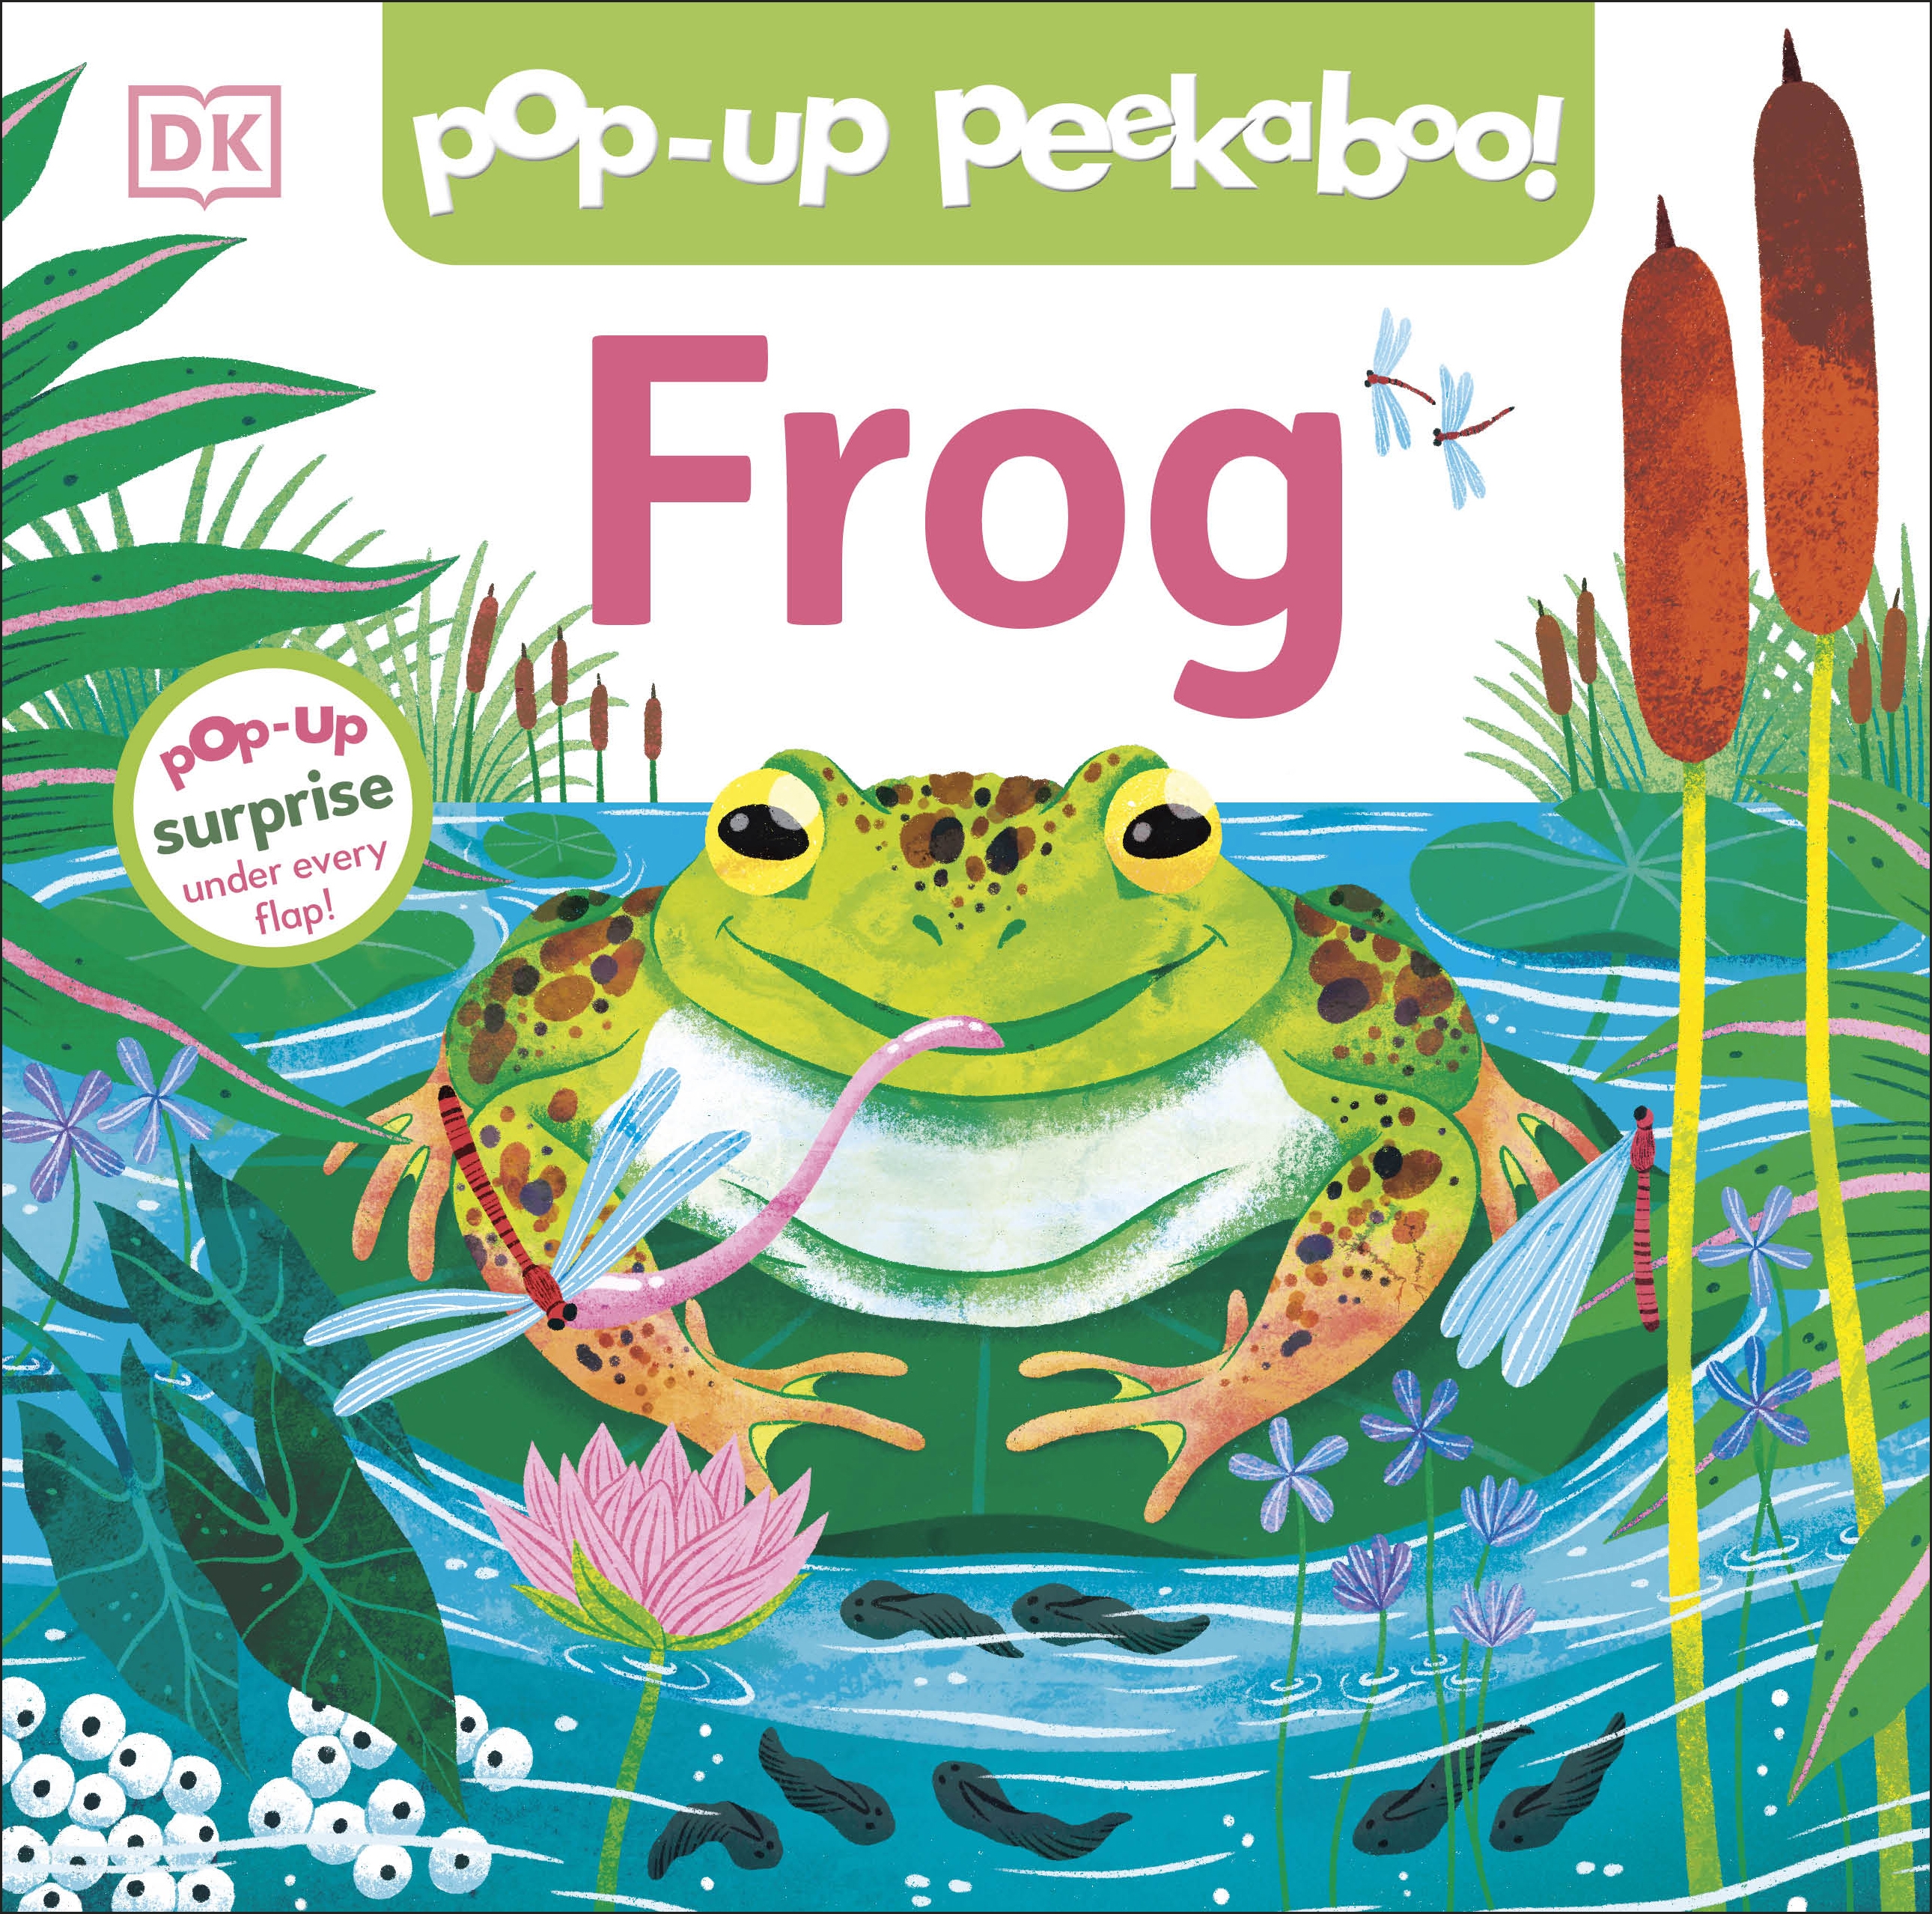 Pop-Up Peekaboo: Frog - Pop-Up Surprise Under Every Flap by DK